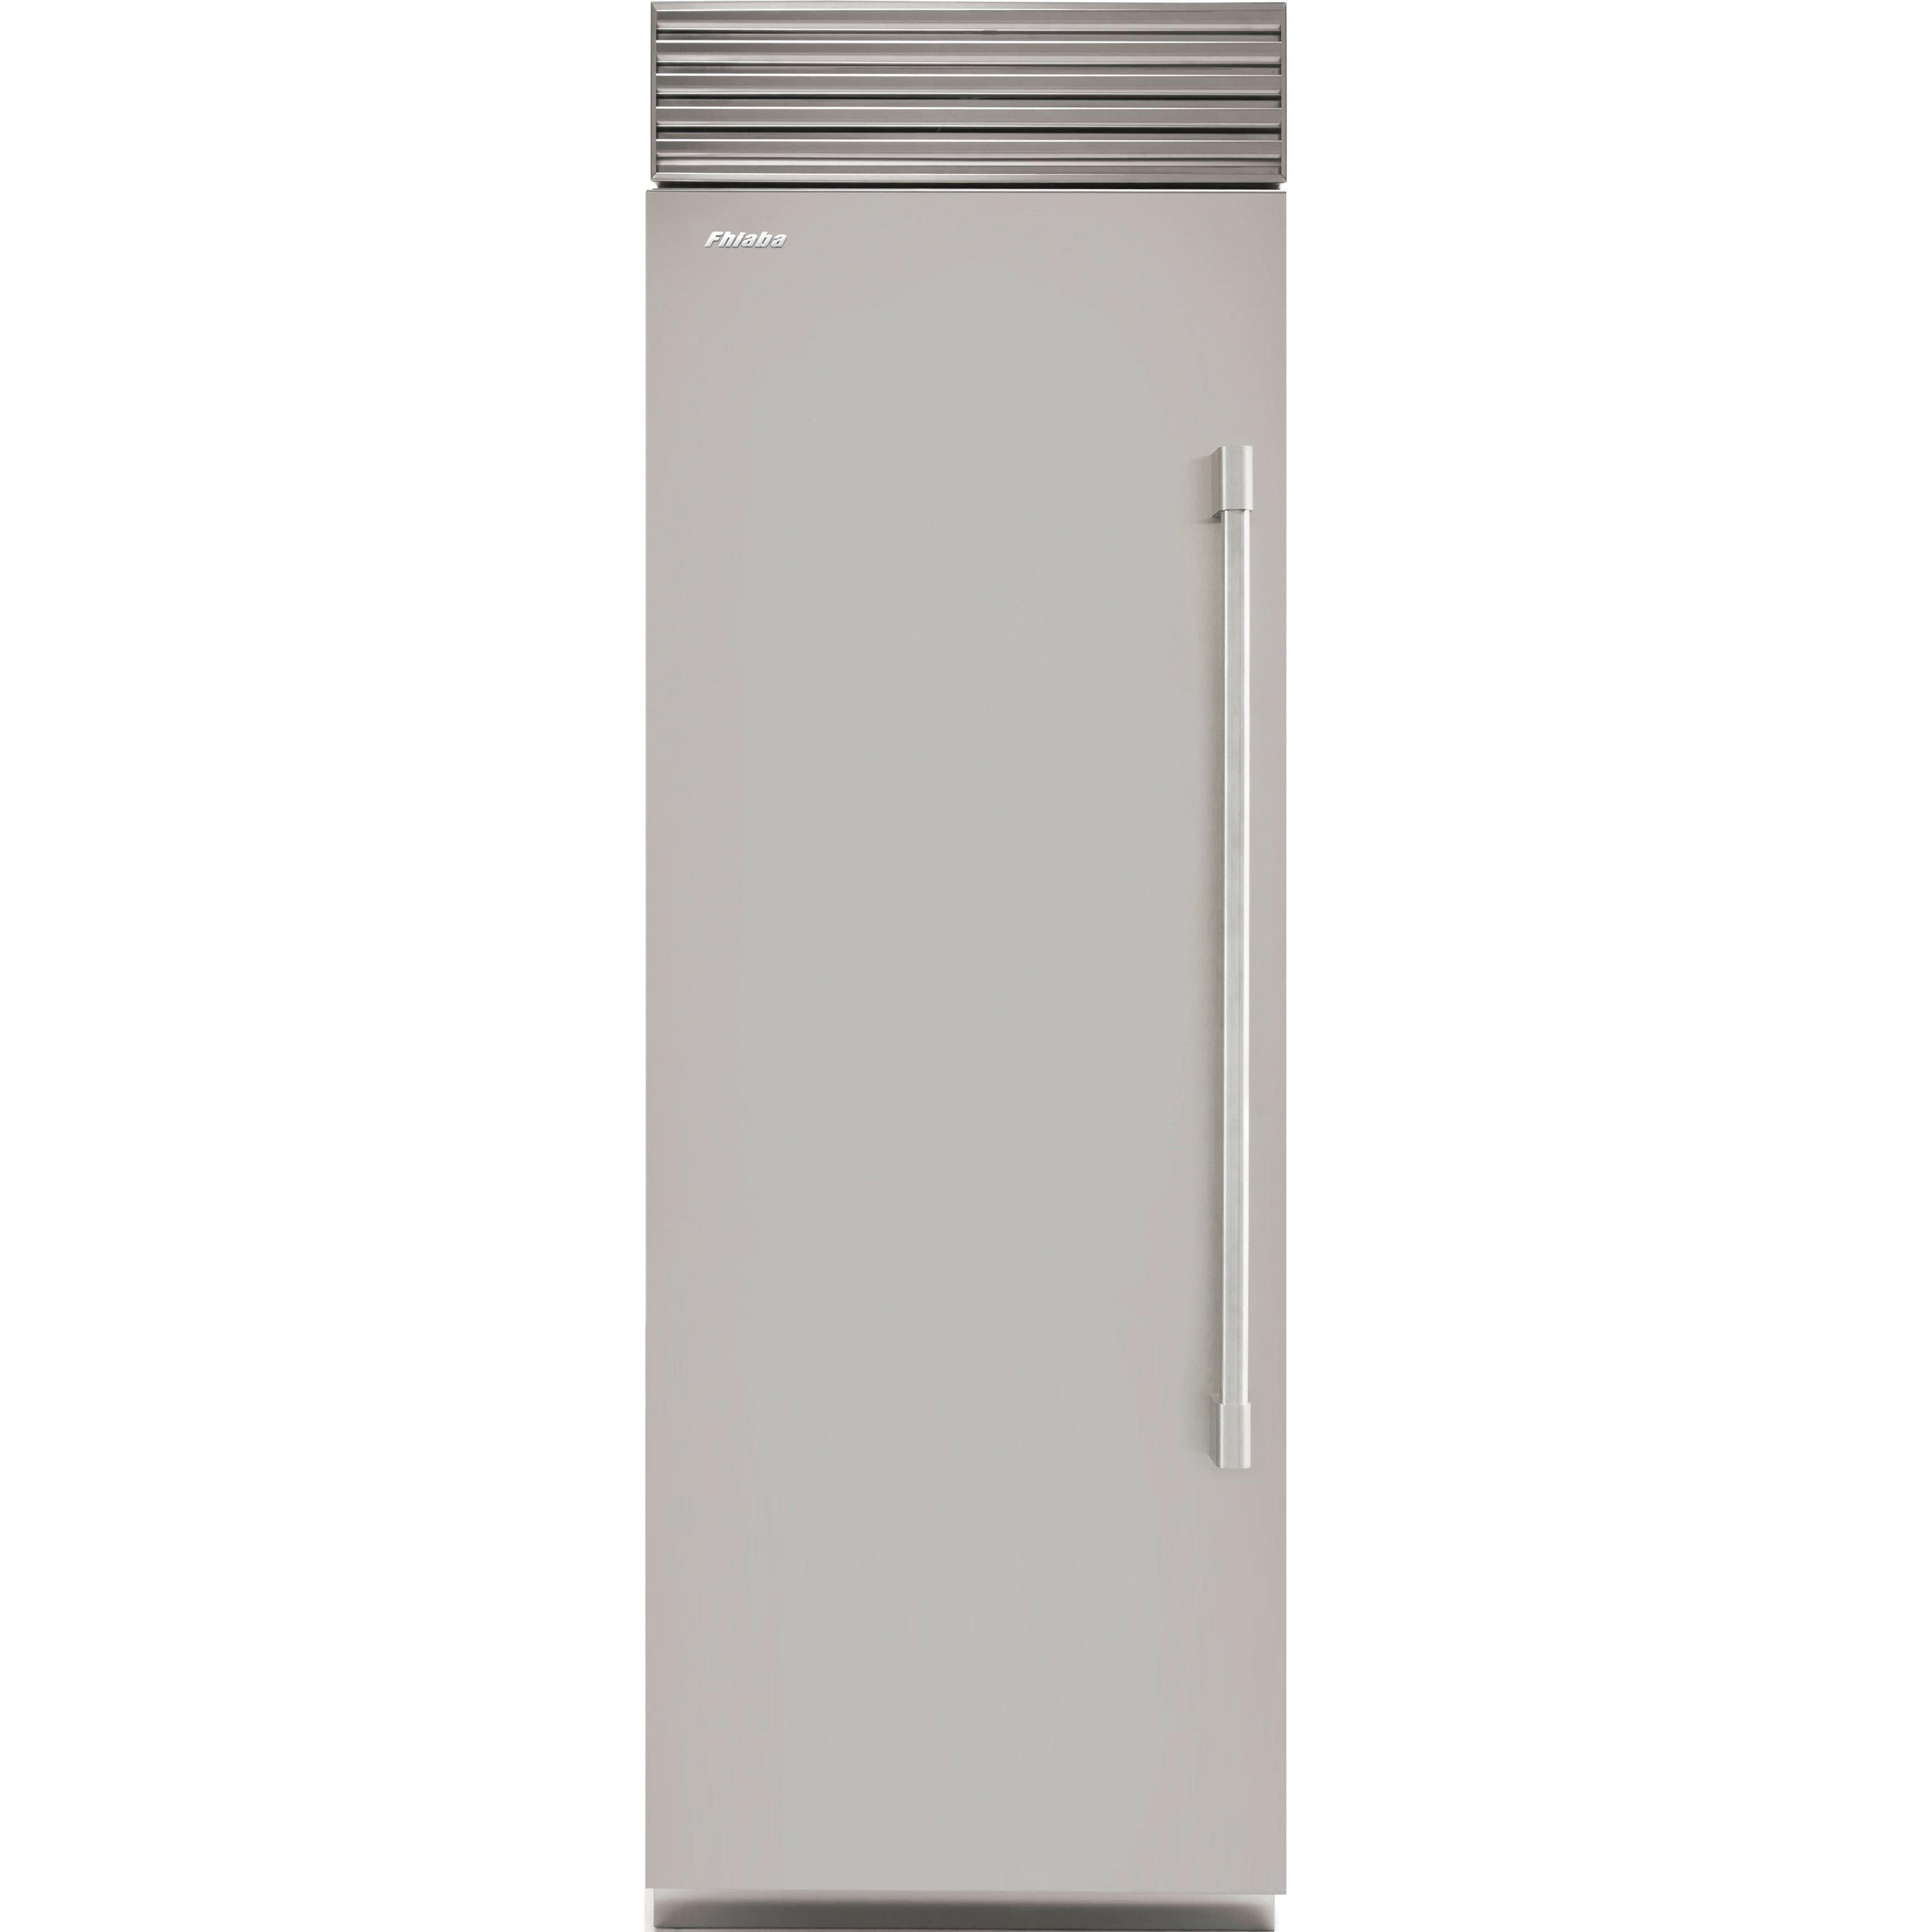 Fhiaba 16.87 cu. ft. Upright Freezer with Smart Touch TFT Display FP30FZC-LS2 Freezers FP30FZCLS2 Luxury Appliances Direct